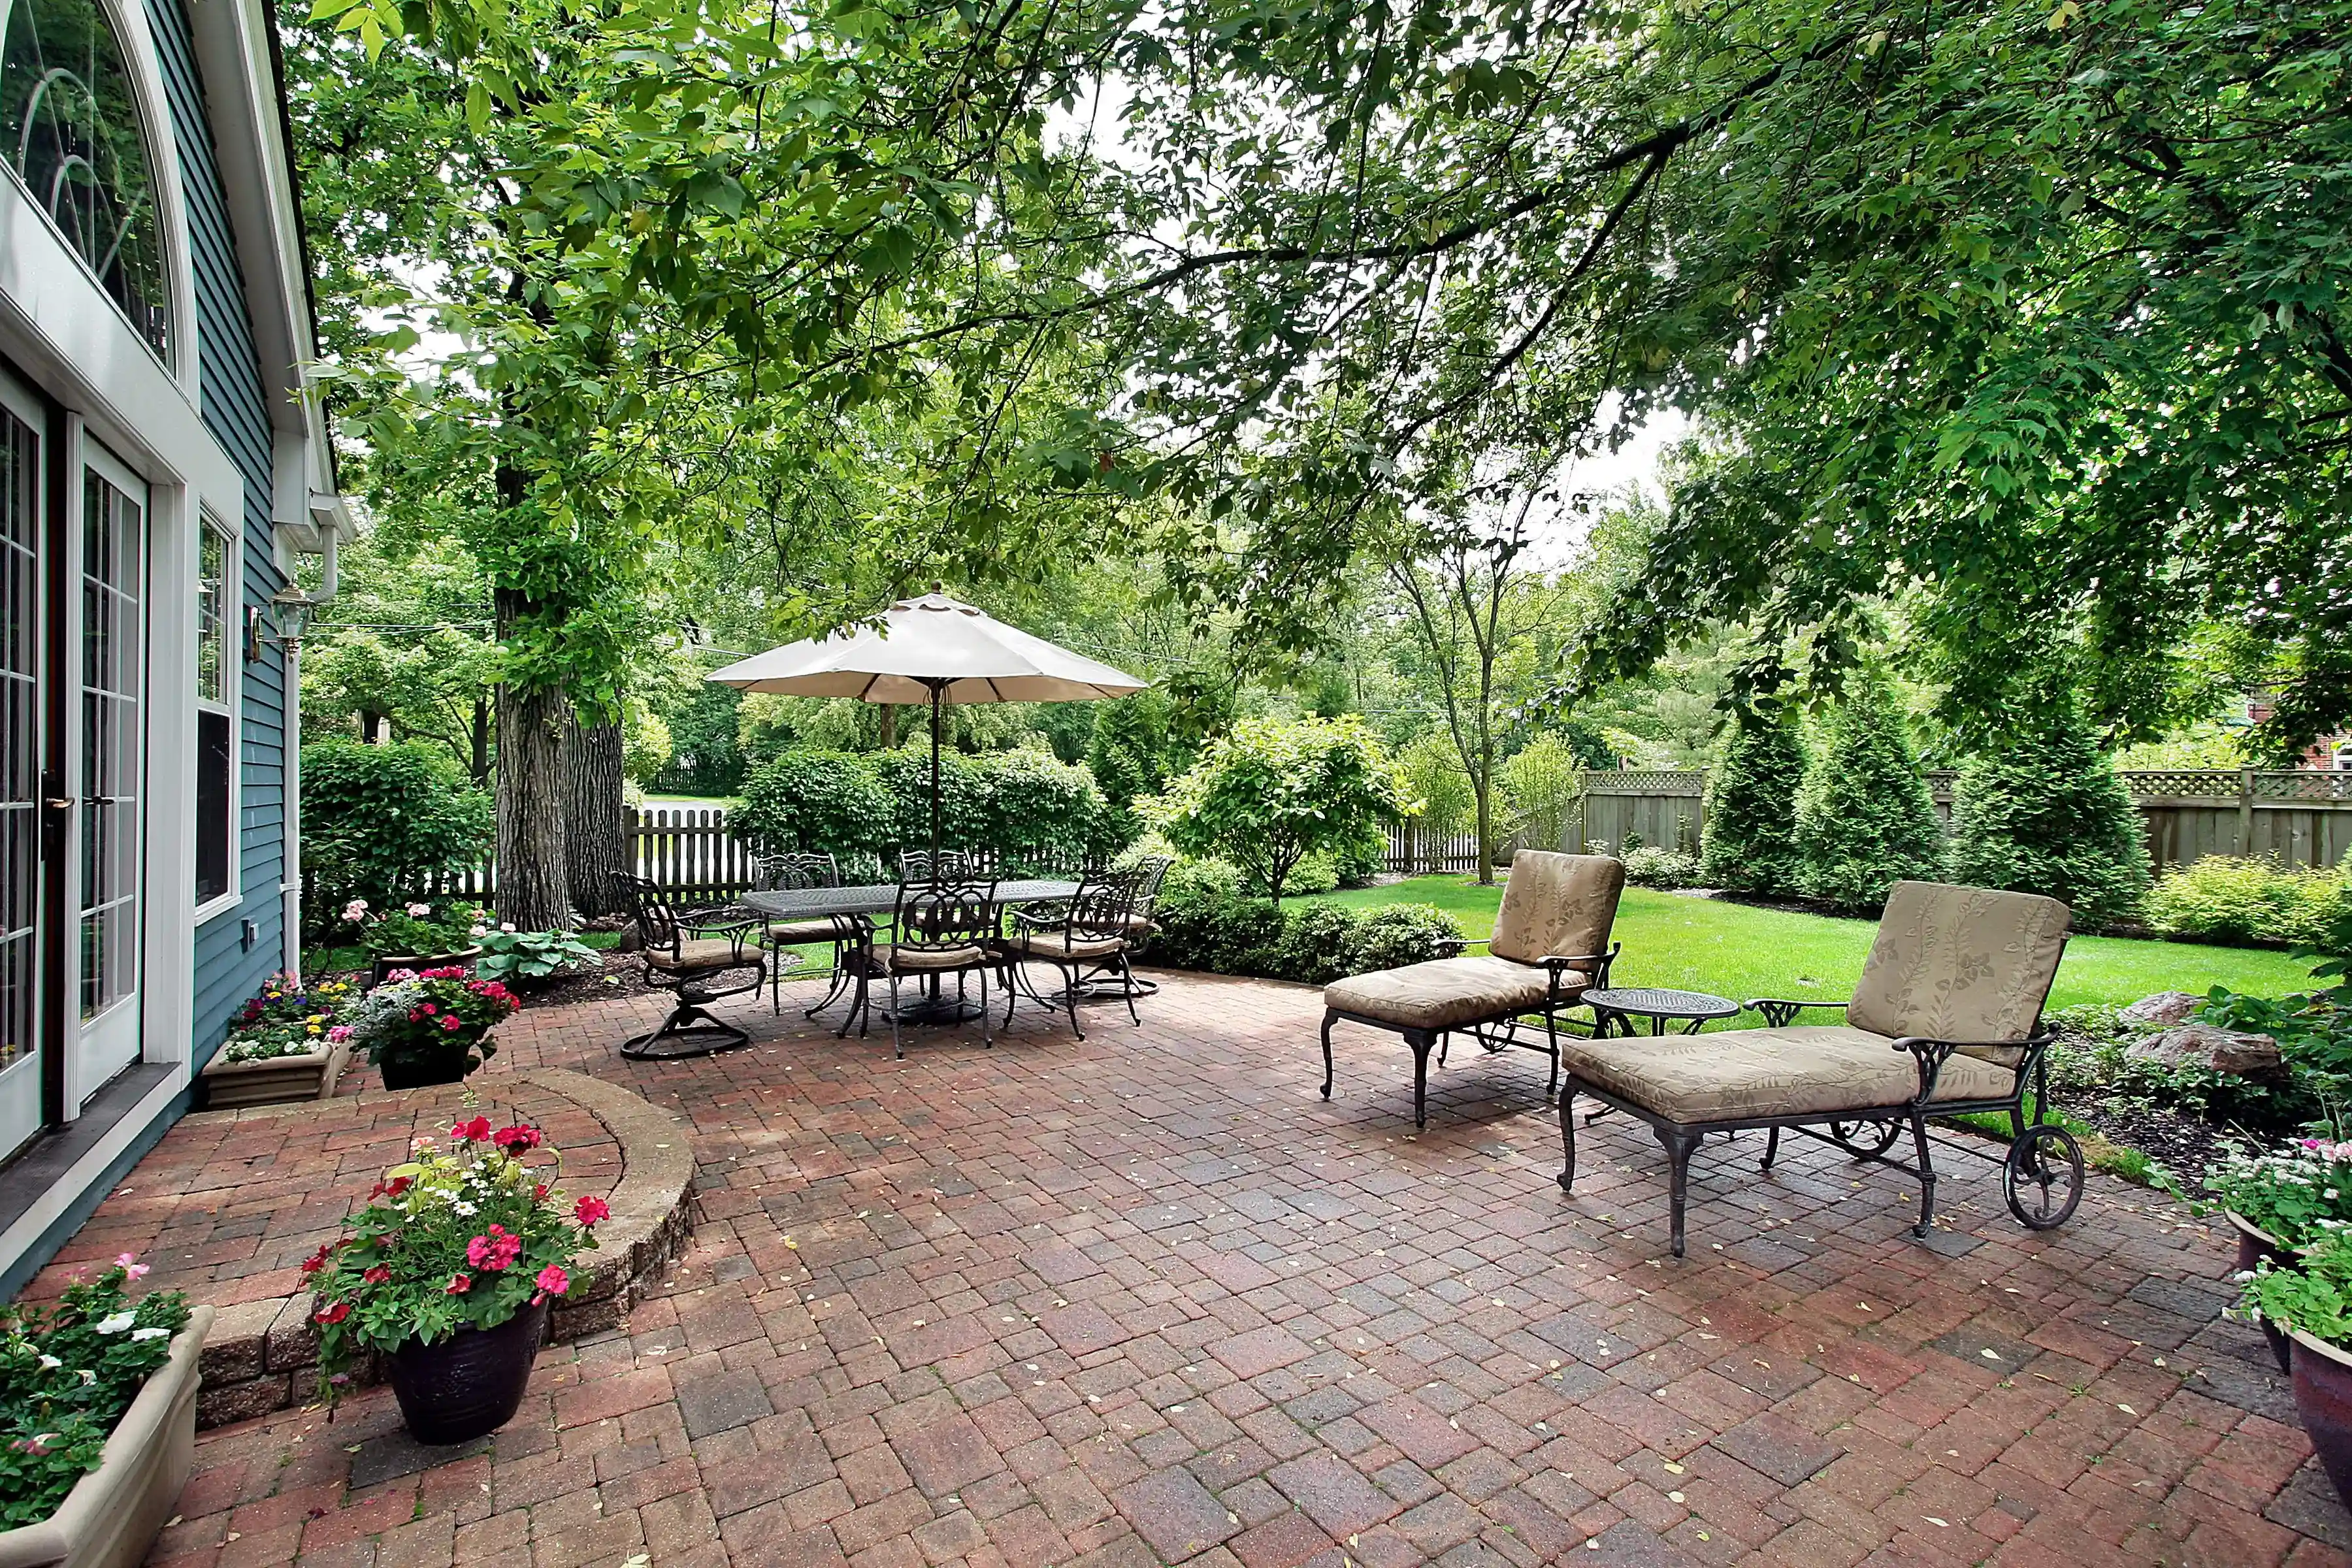 Beautiful backyard patio in Philadelphia with brick paving, outdoor furniture, and lush greenery.